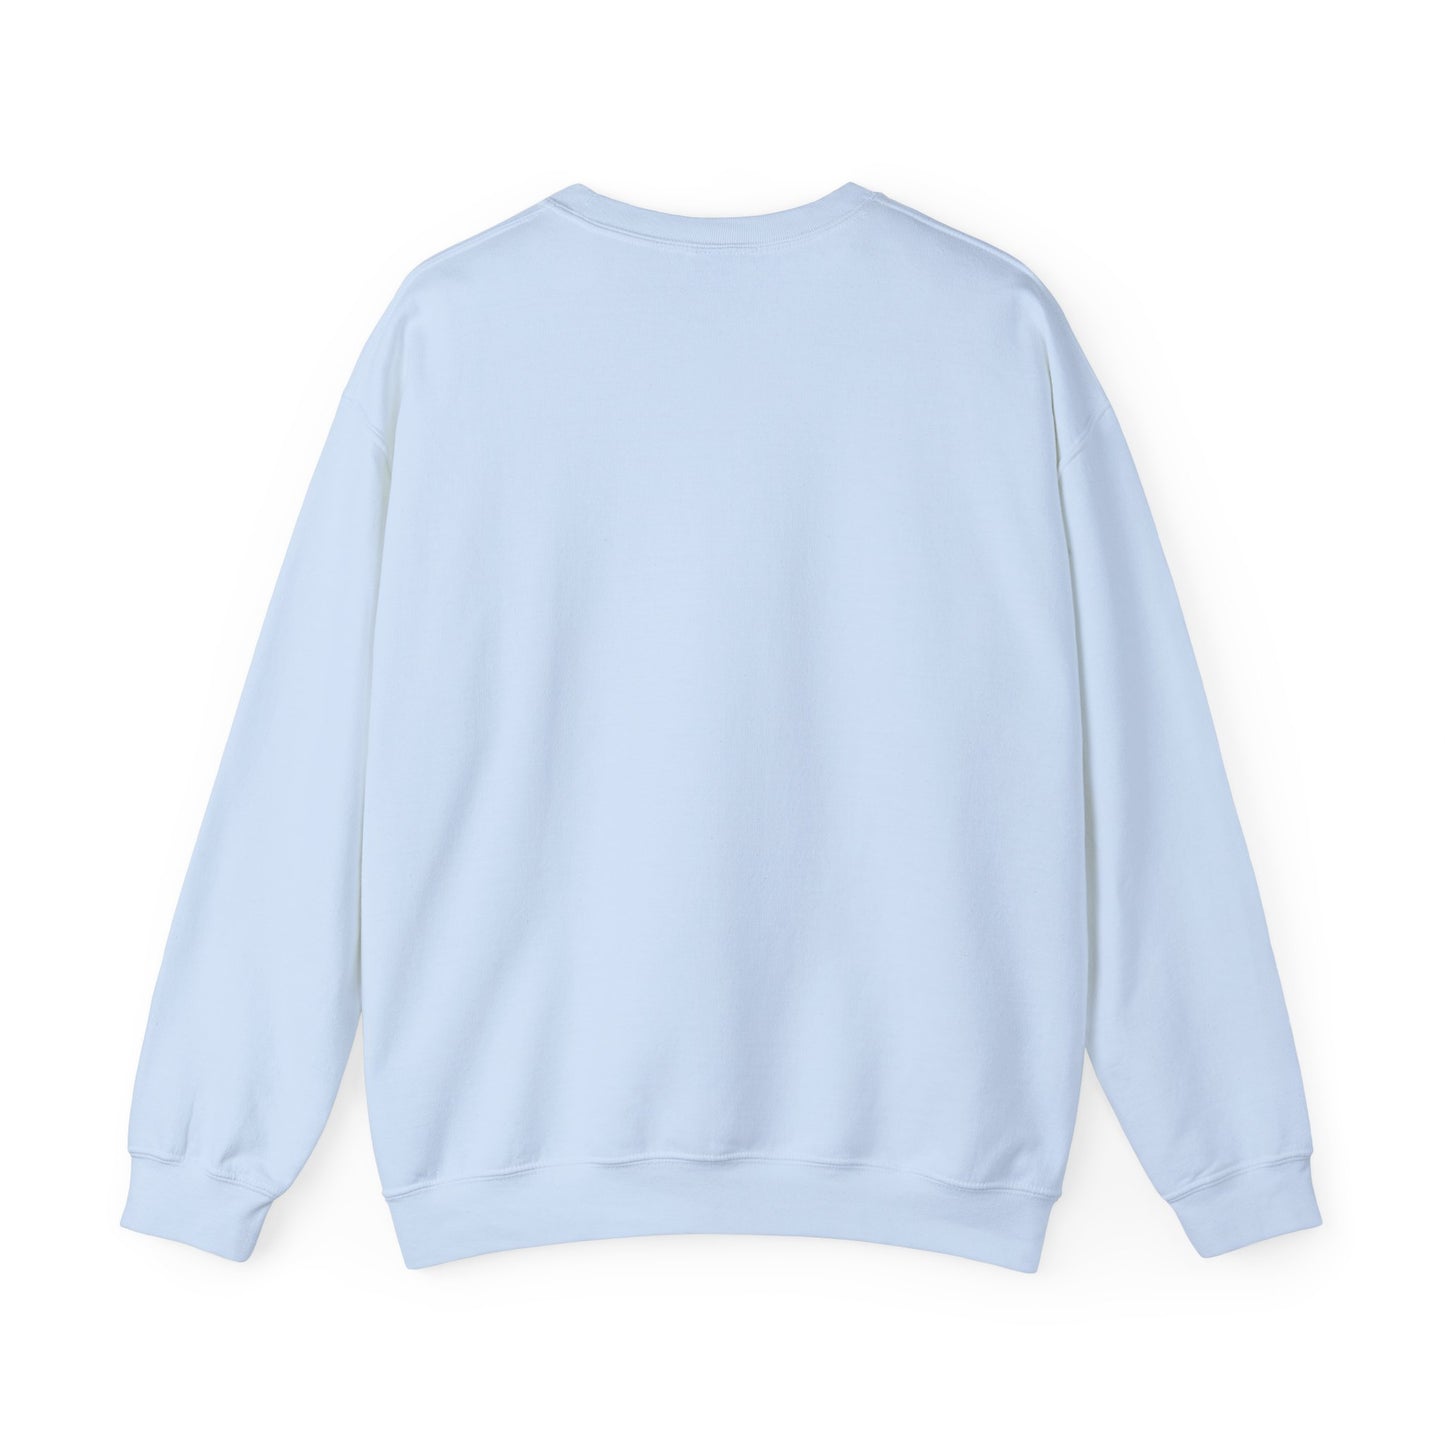 Pass it On Unisex Heavy Blend™ Crewneck Sweatshirt